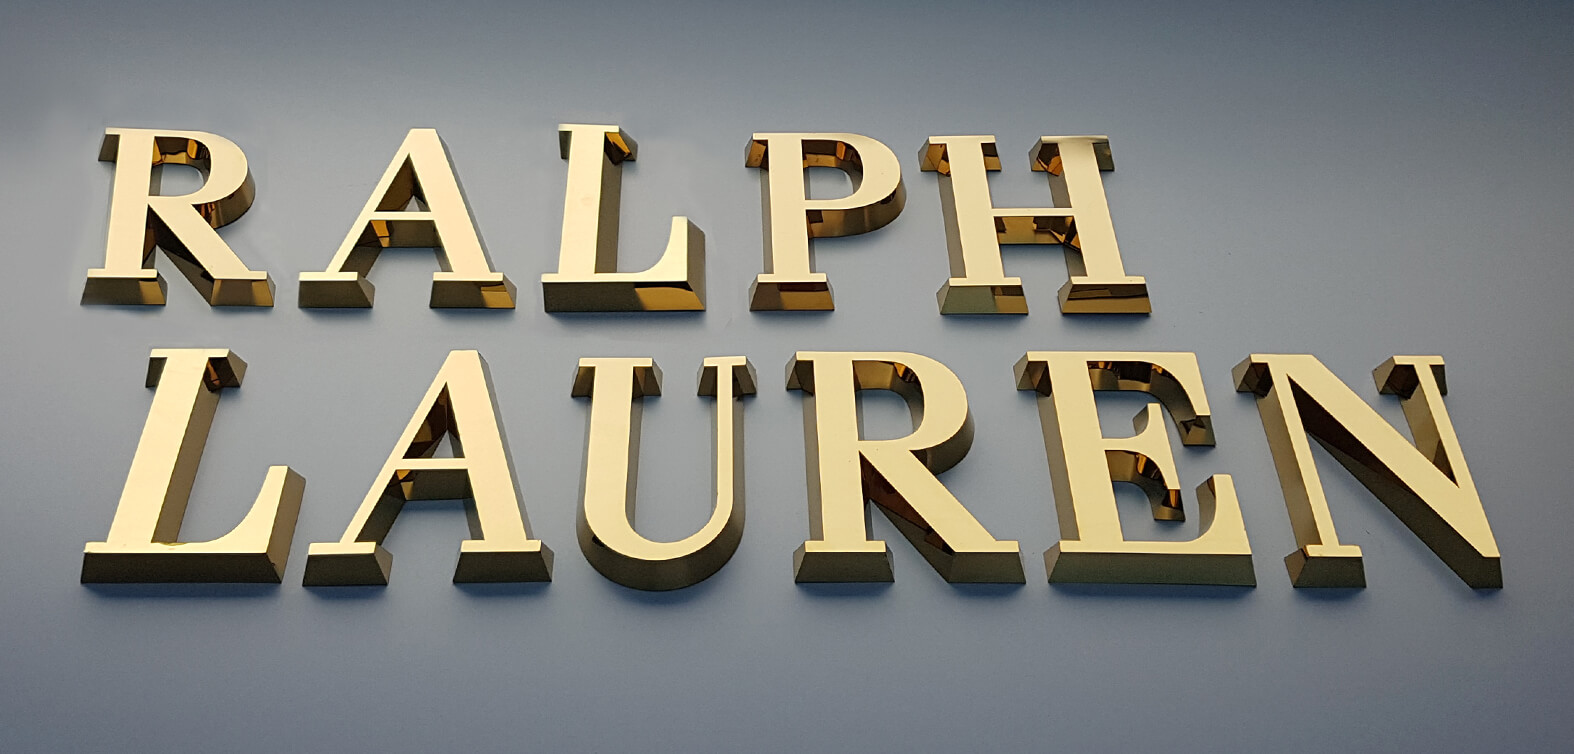 Ralph Lauren - Ralph Lauren - gold three-dimensional letters made of stainless steel